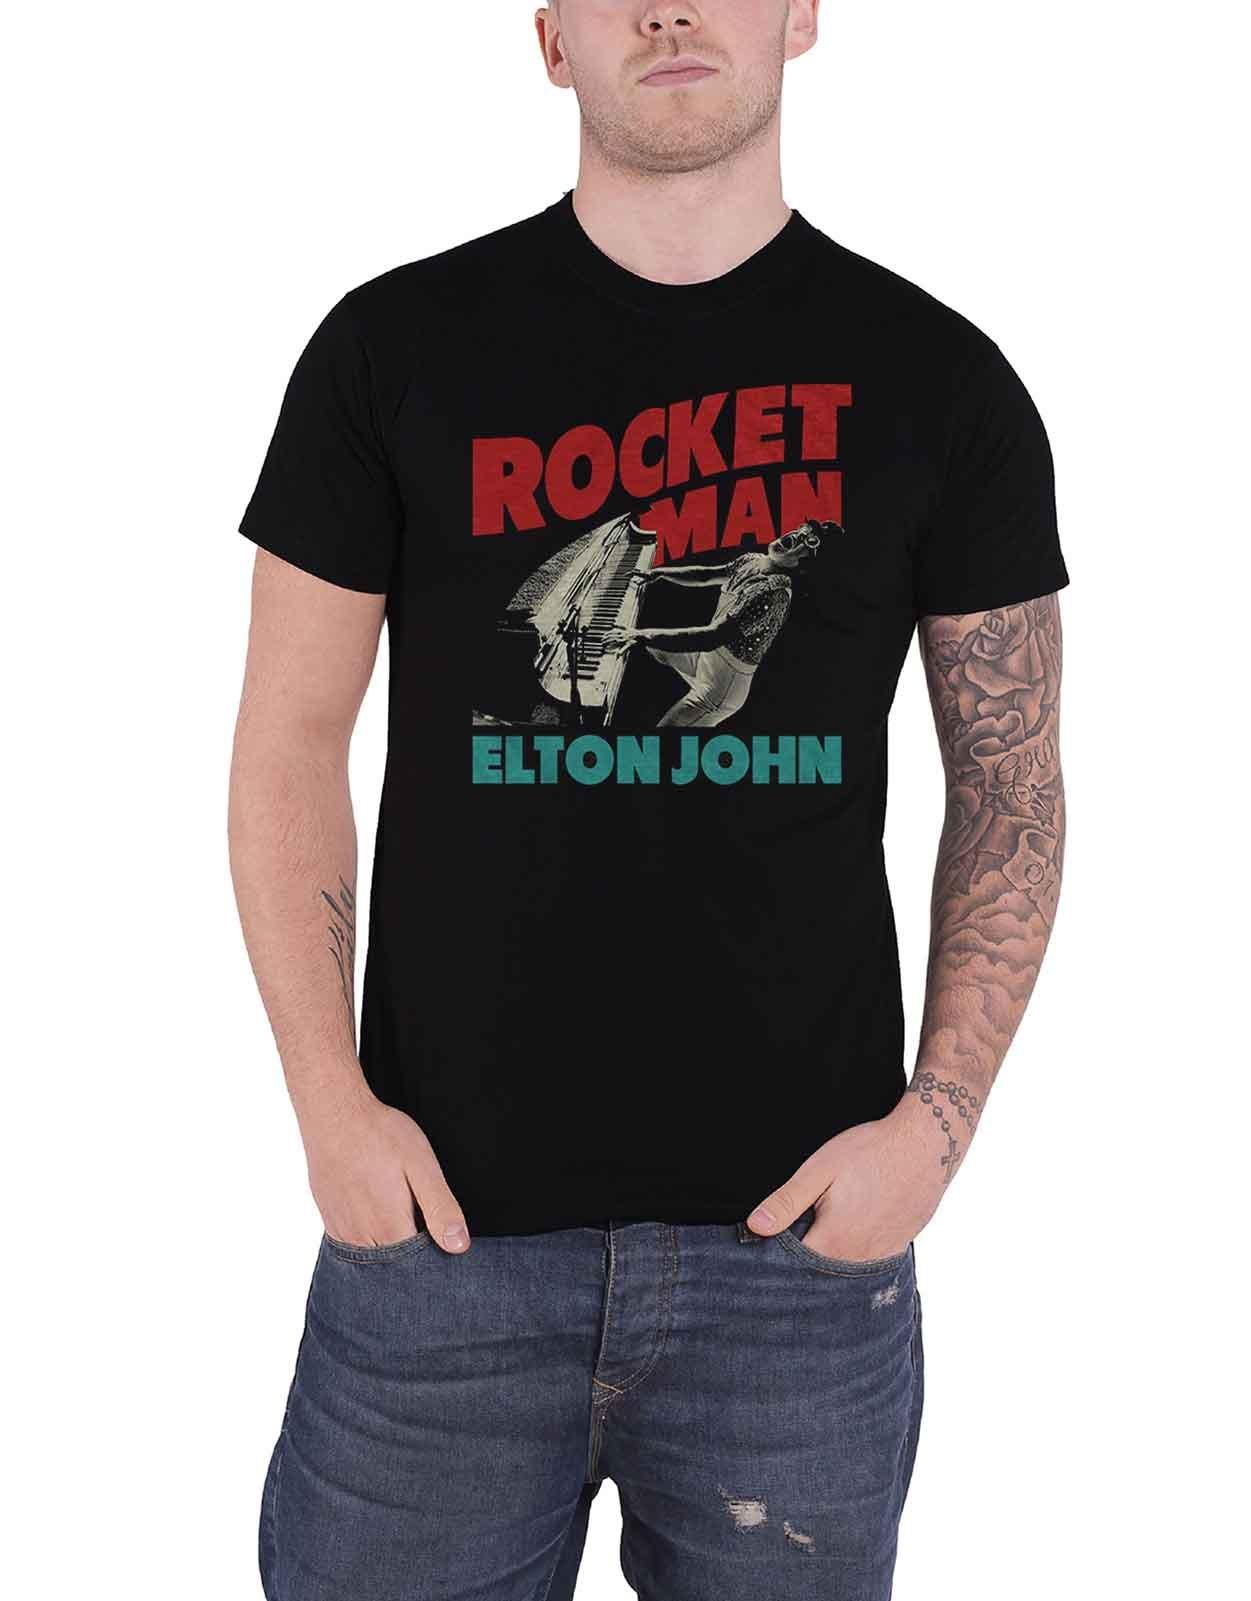 Футболка Rocketman Piano Elton John, черный elton john elton john rarities and b sides 3 lp